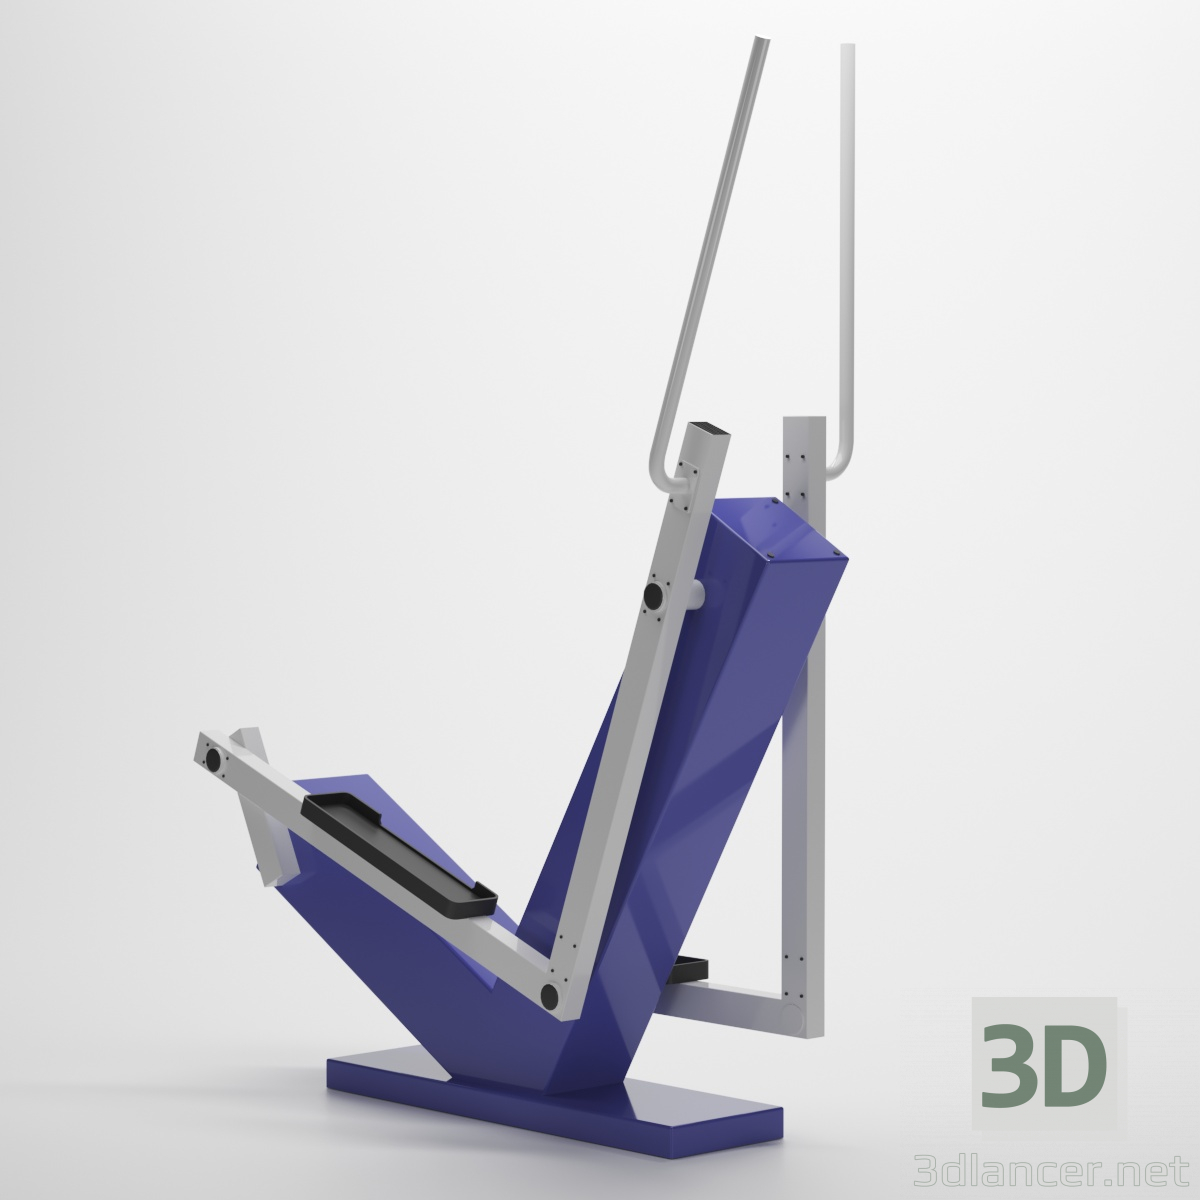 3d Street exercise machine "Step" model buy - render